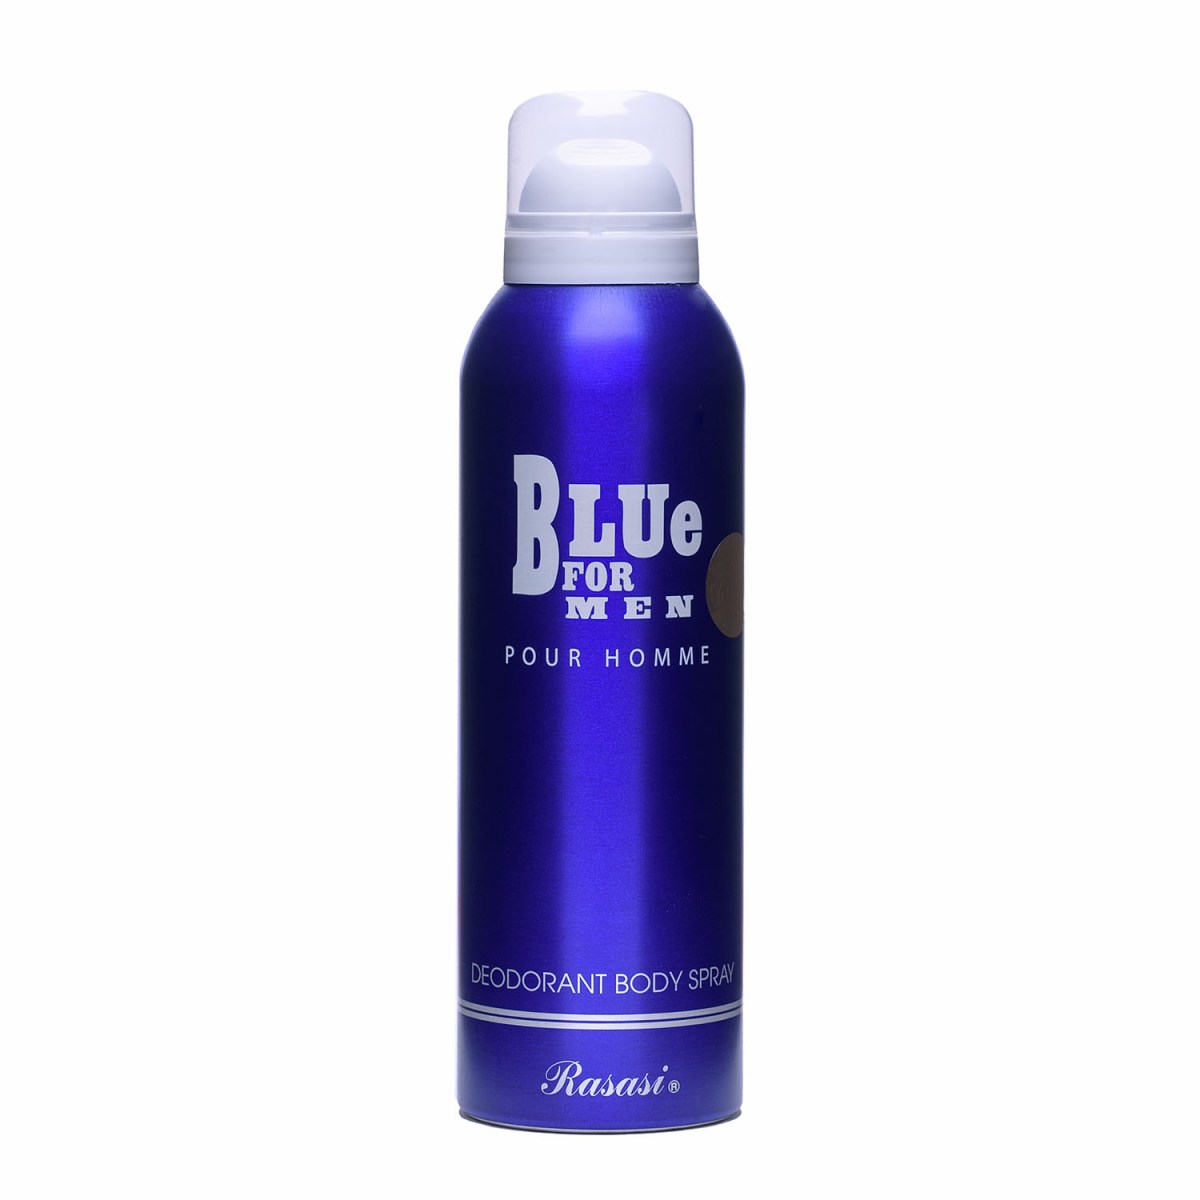 Blue For Men by Rasasi for Men Body Spray - 200ml